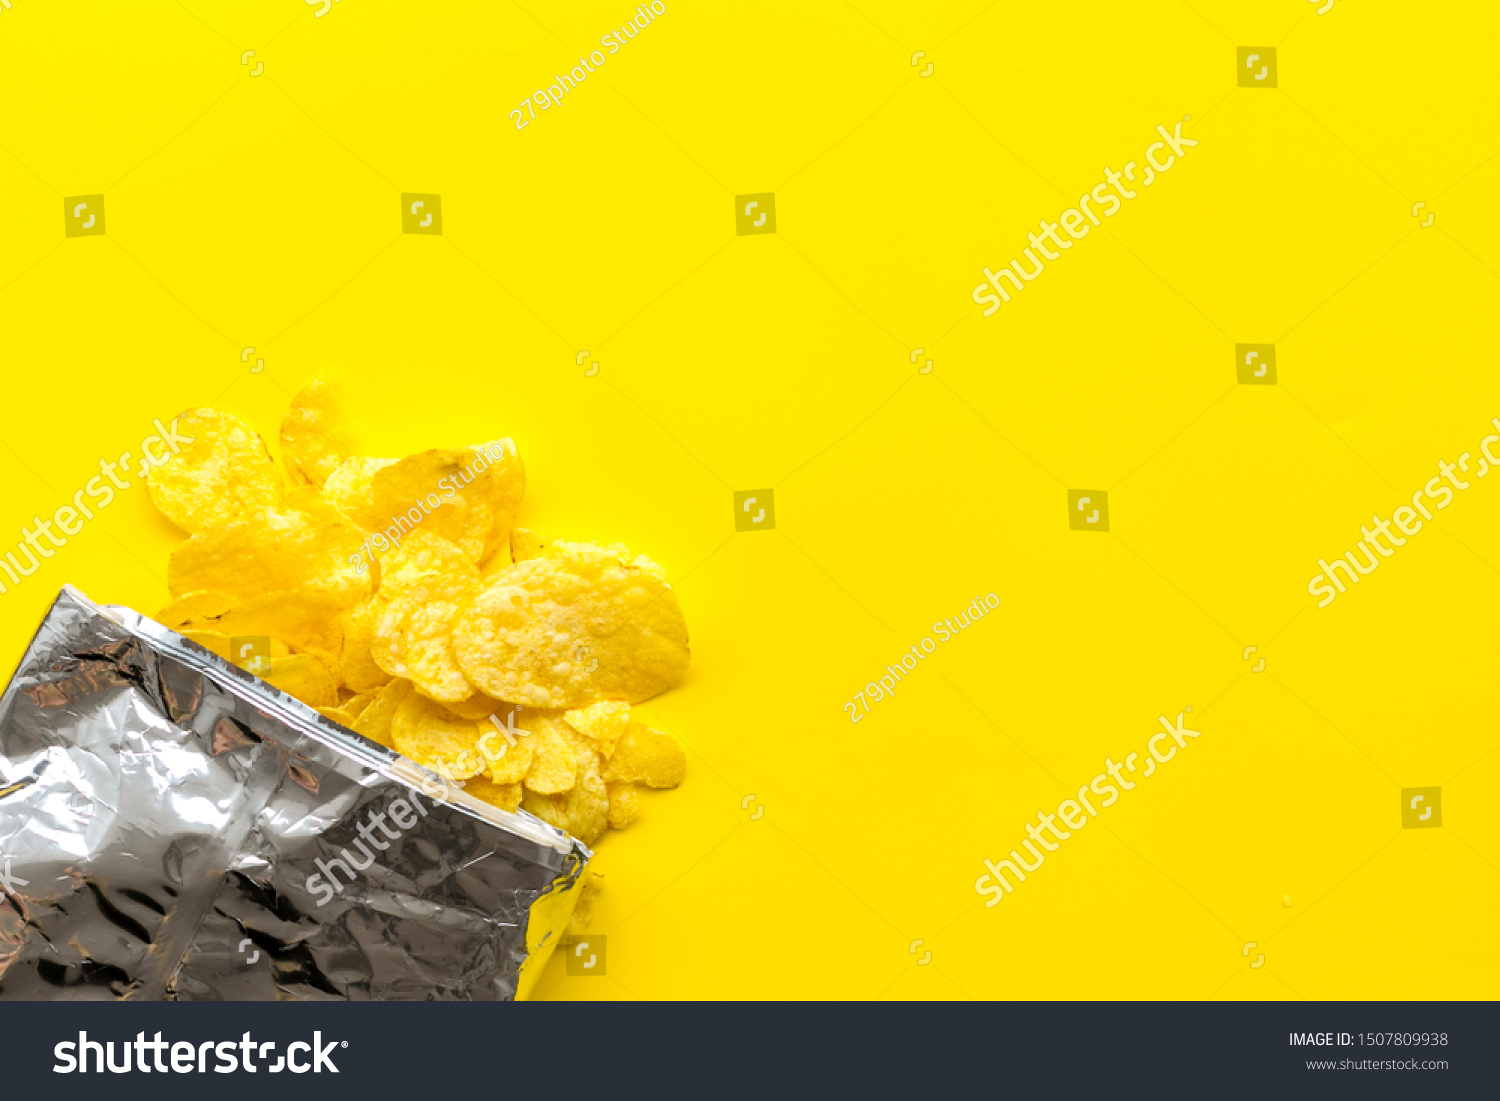 Download Potato Crisps Bag On Yellow Background Stock Photo Edit Now 1507809938 Yellowimages Mockups